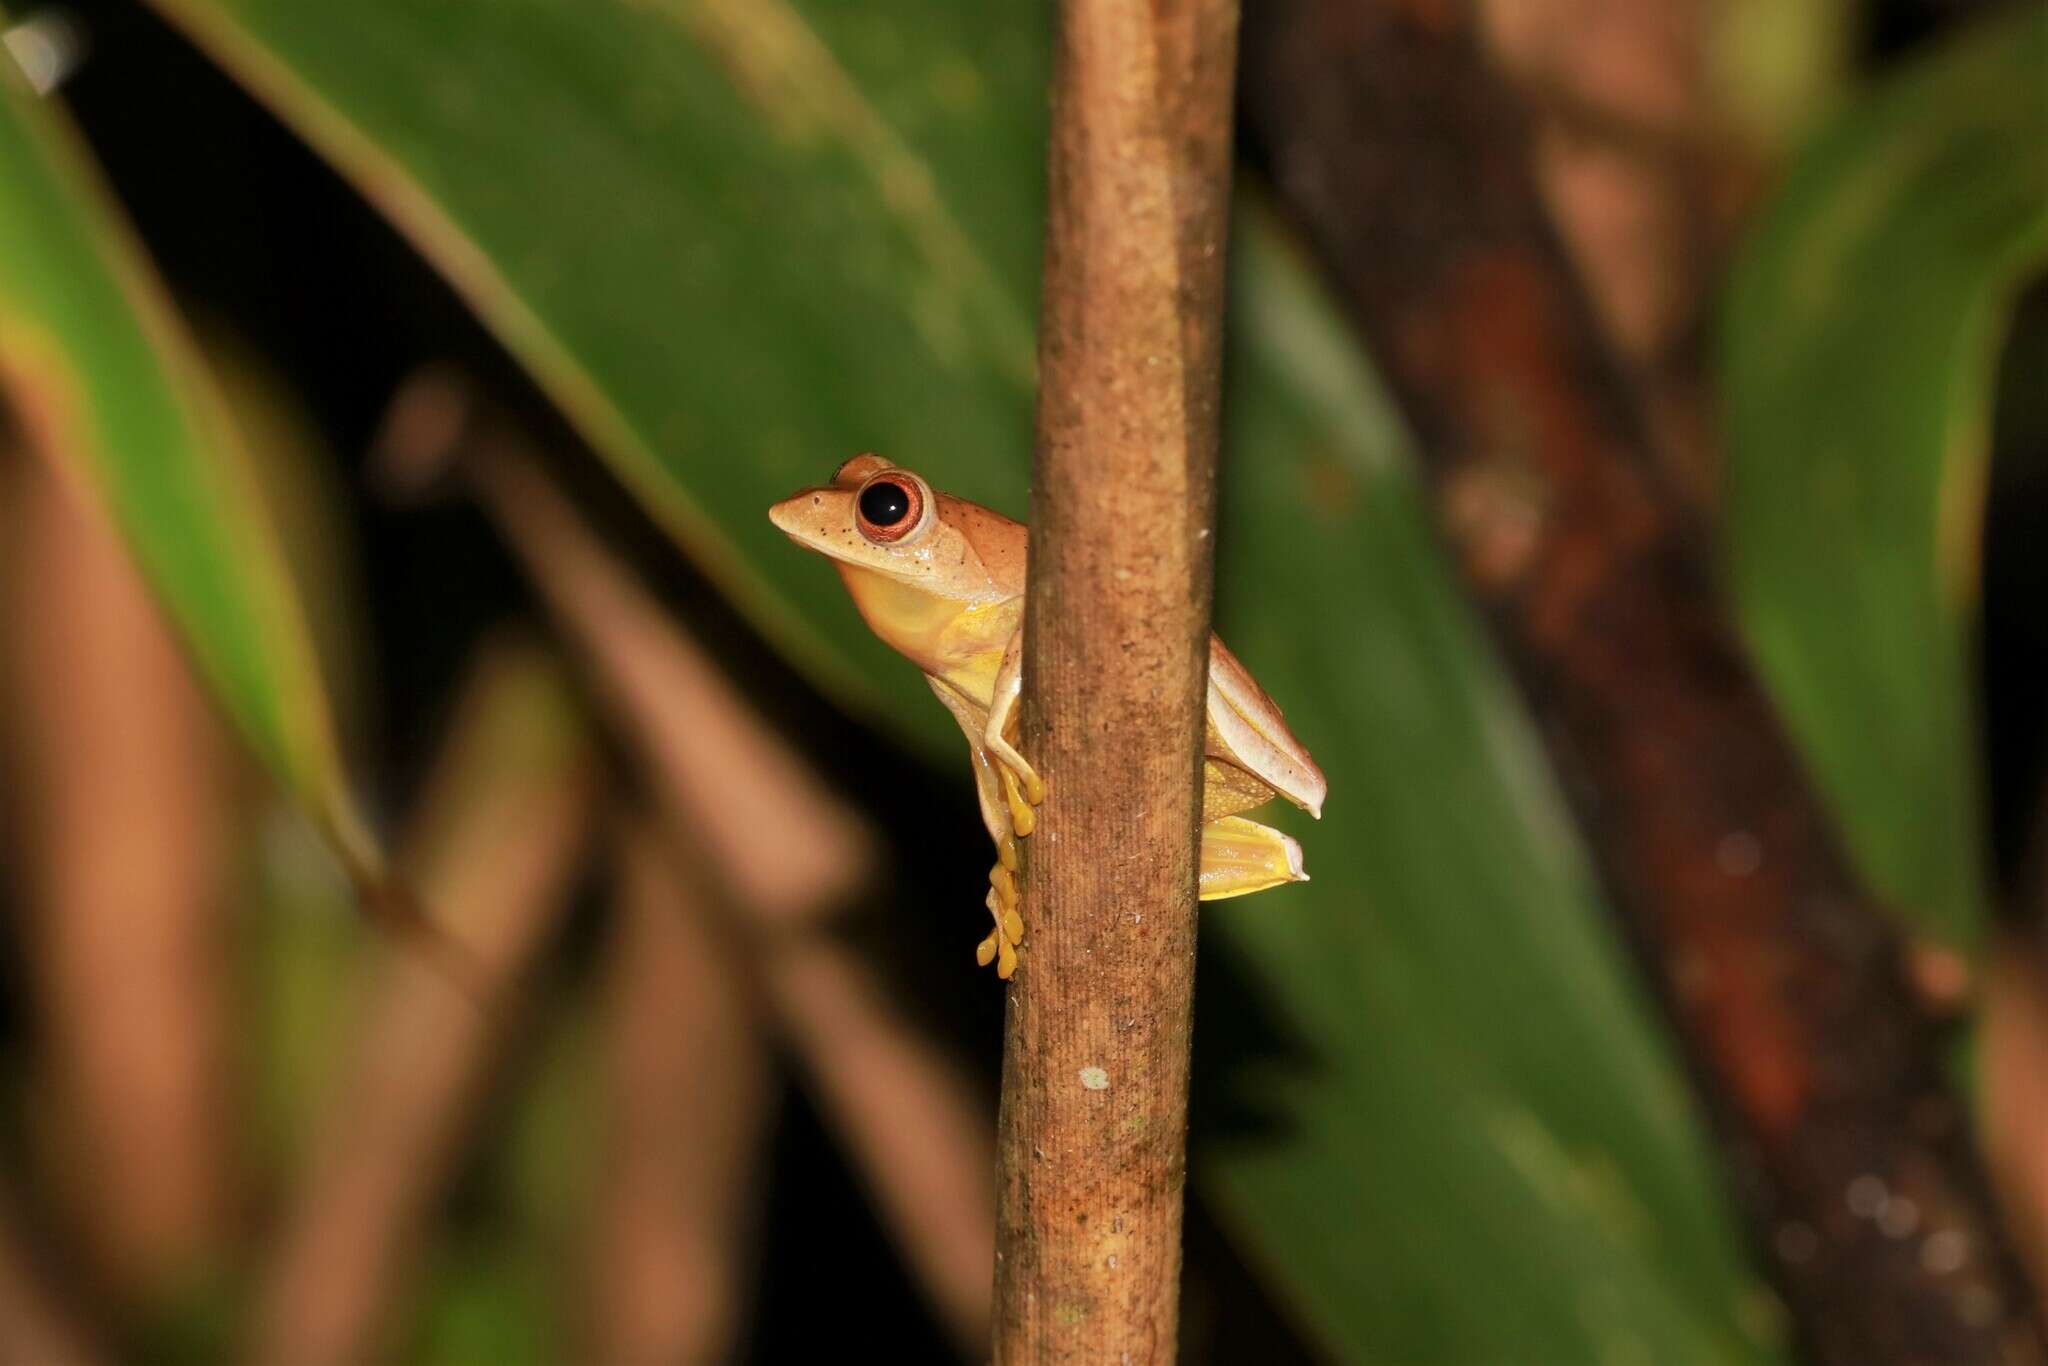 Image of Namdapha bush frog